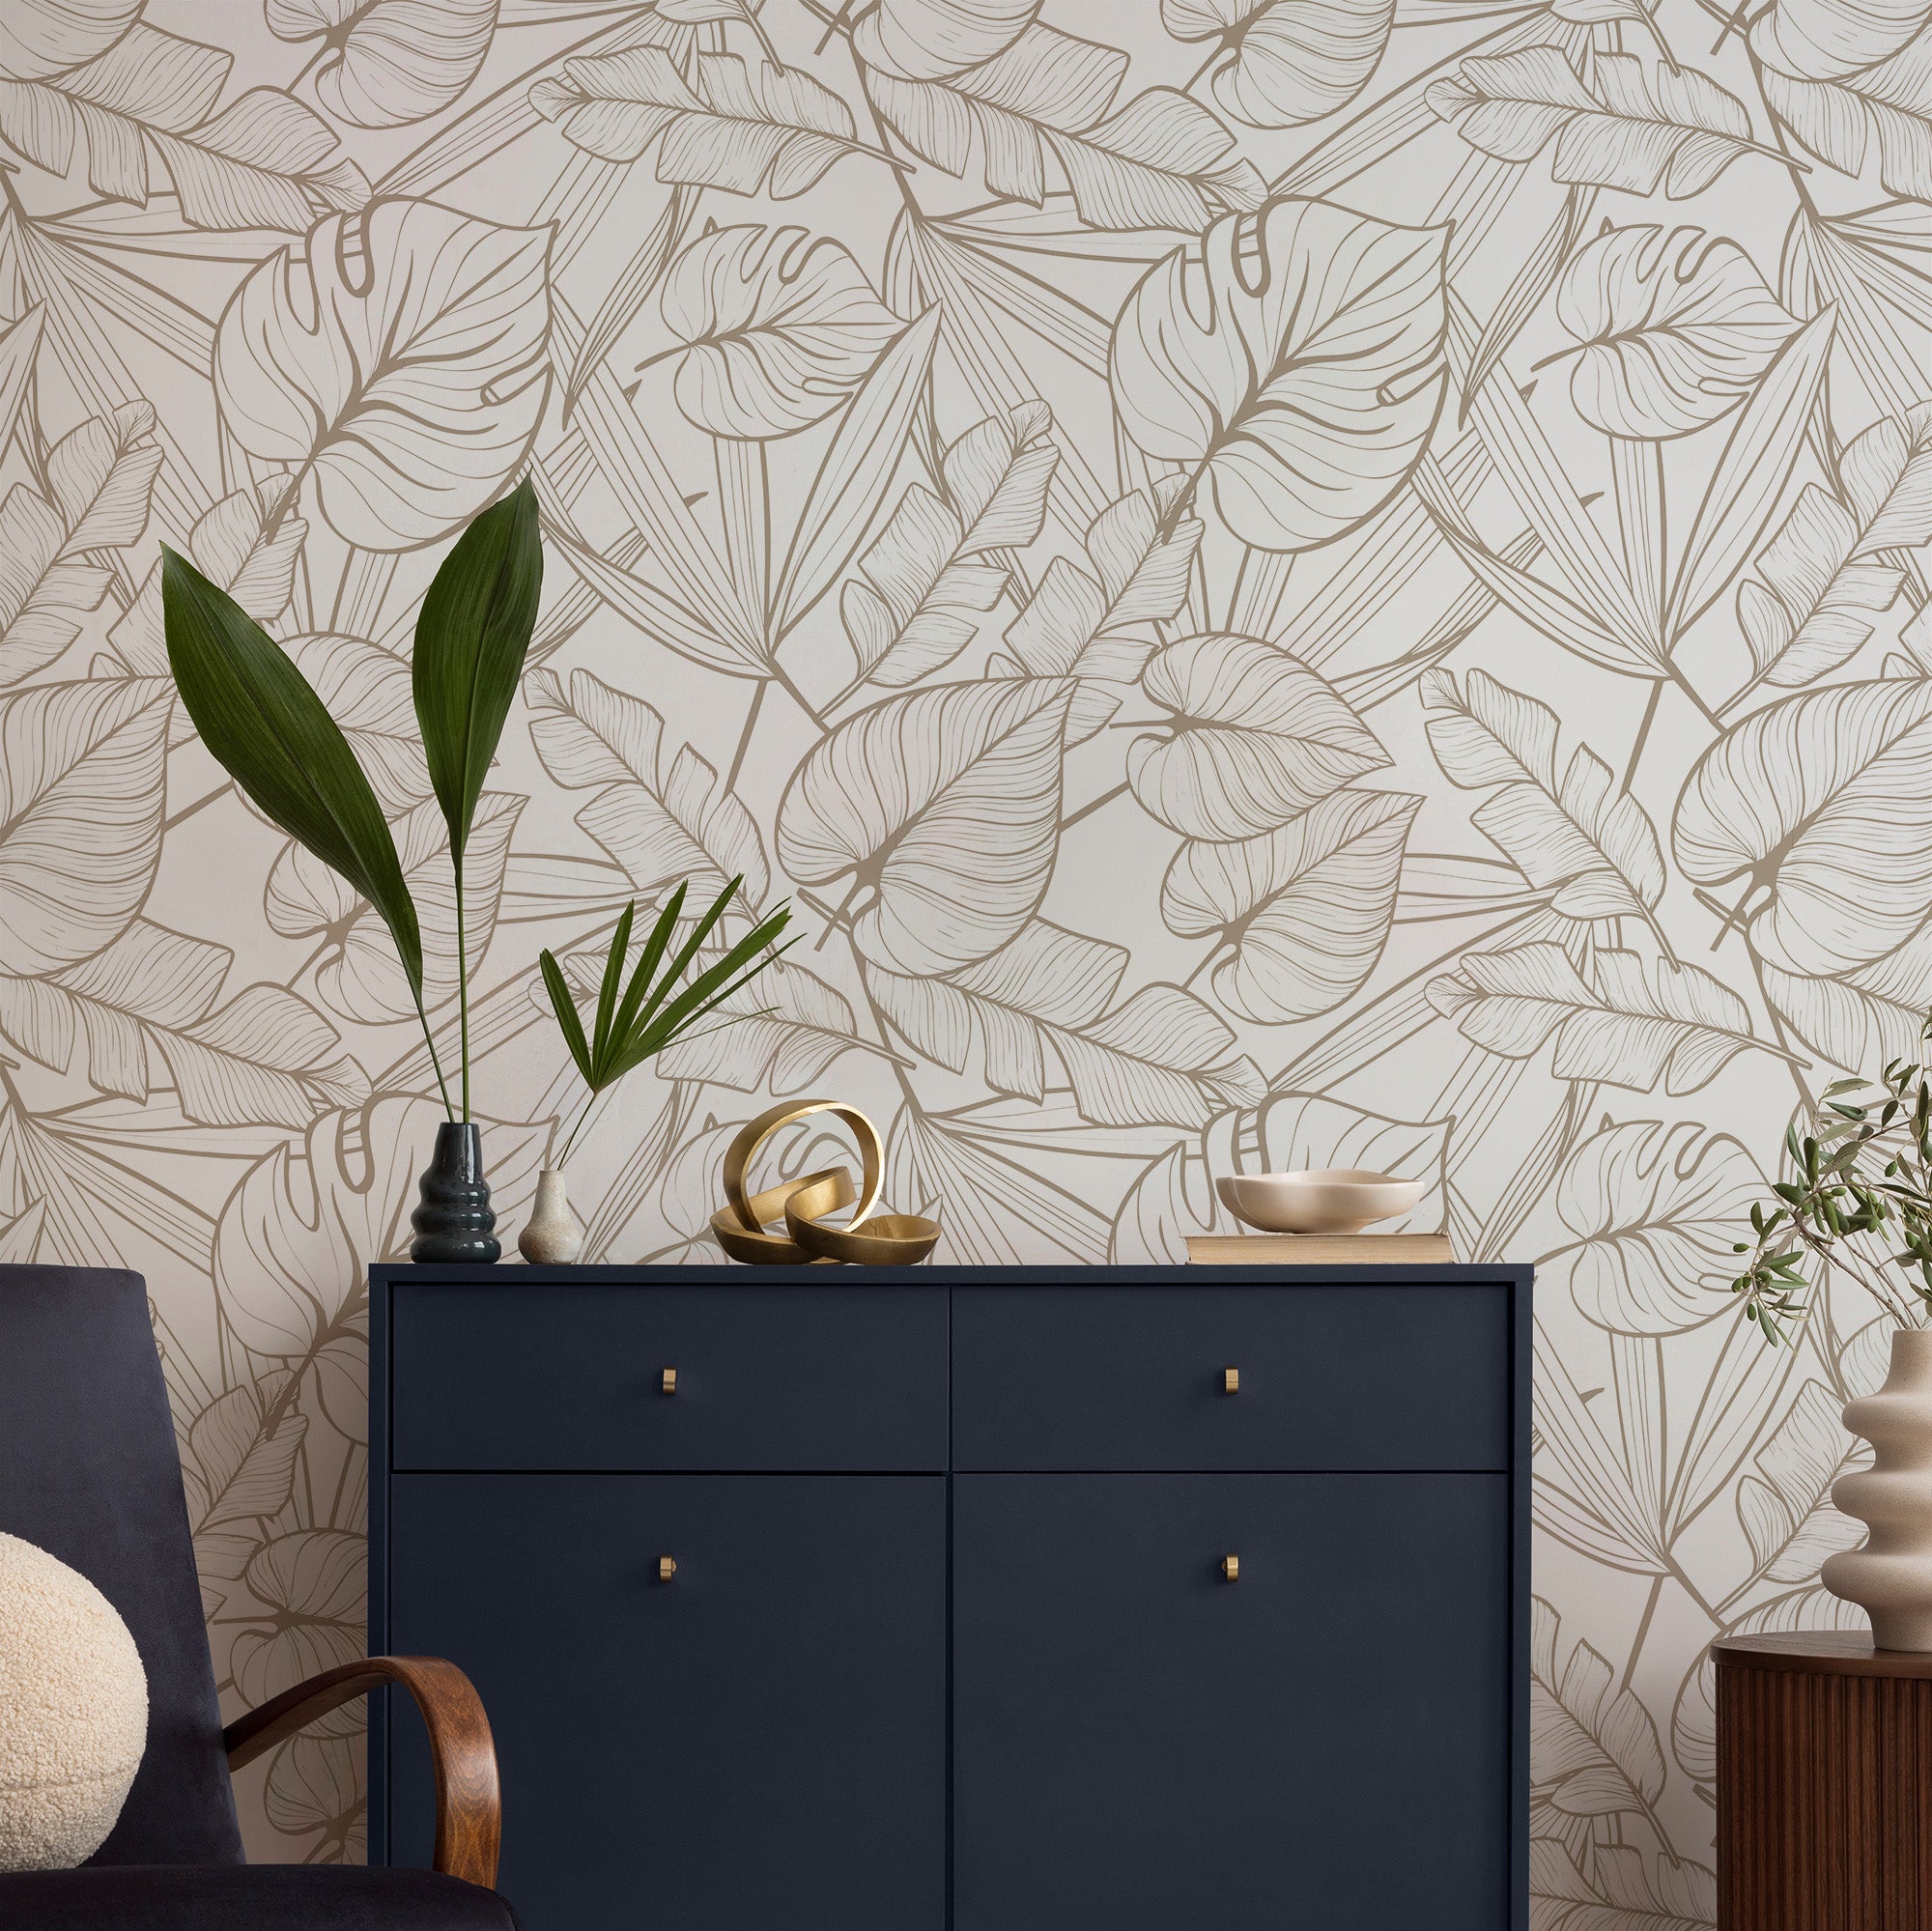 Tropical Peel & Stick Removable Wallpaper | Peel&Stick – Peel & Paper